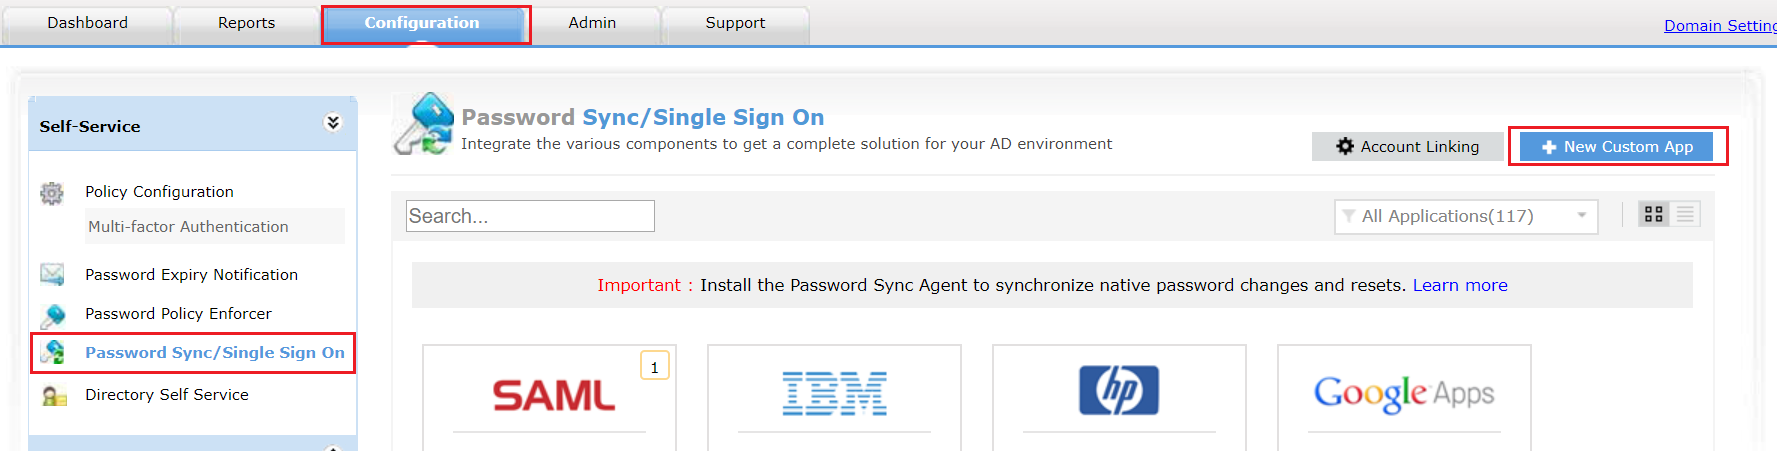 Custom saml apps single sign on configuration